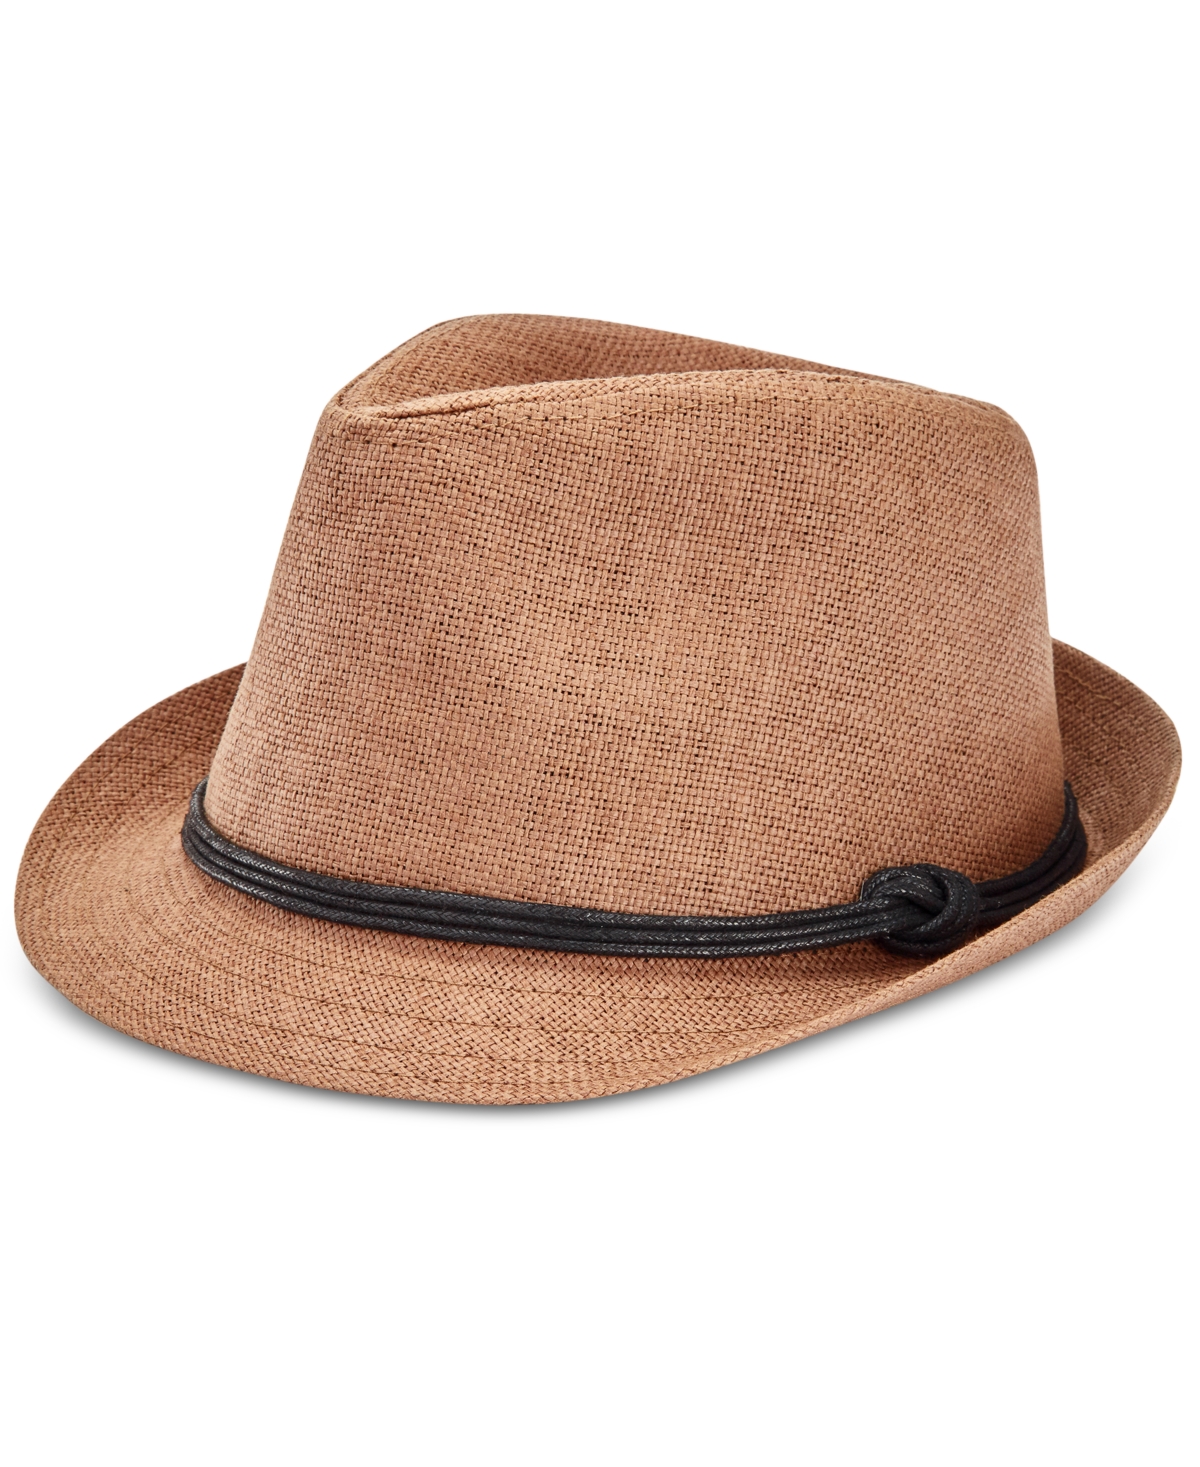 Men's Paper Straw Vintage-Inspired Fedora Hat - Brown